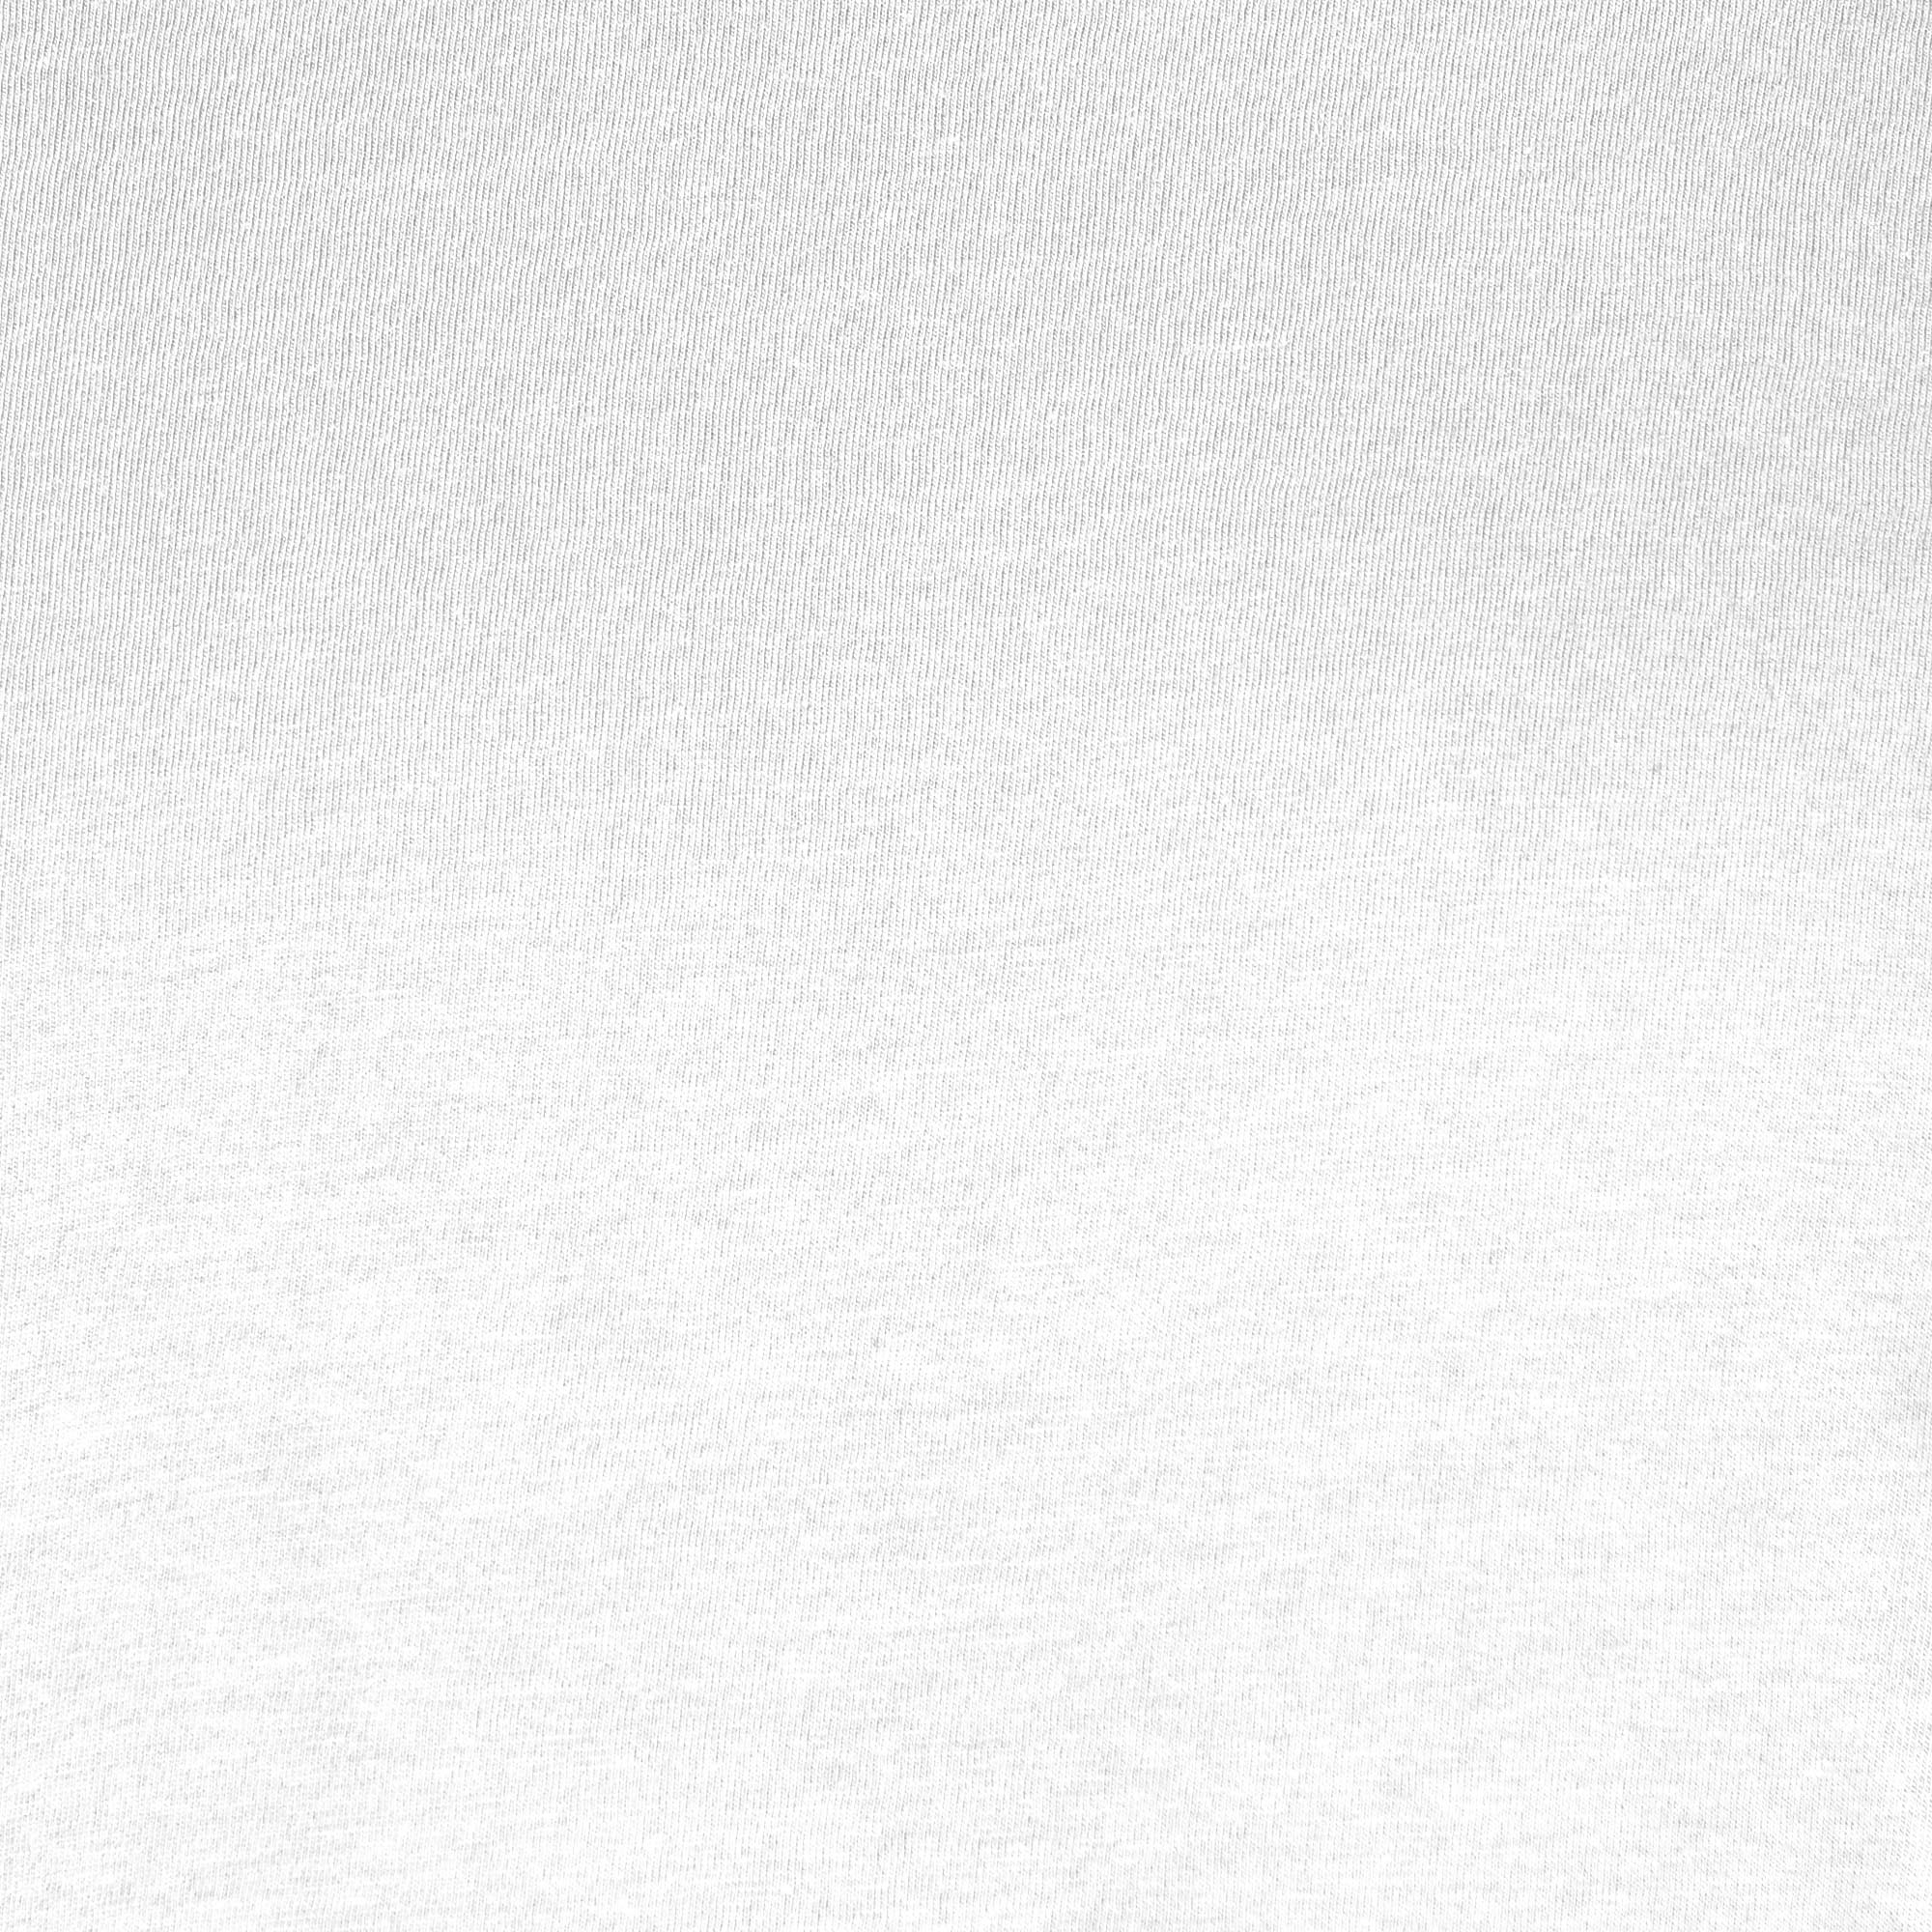 Мужская футболка Diva Teks белая (DTD-02), цвет белый, размер 48-50 - фото 5